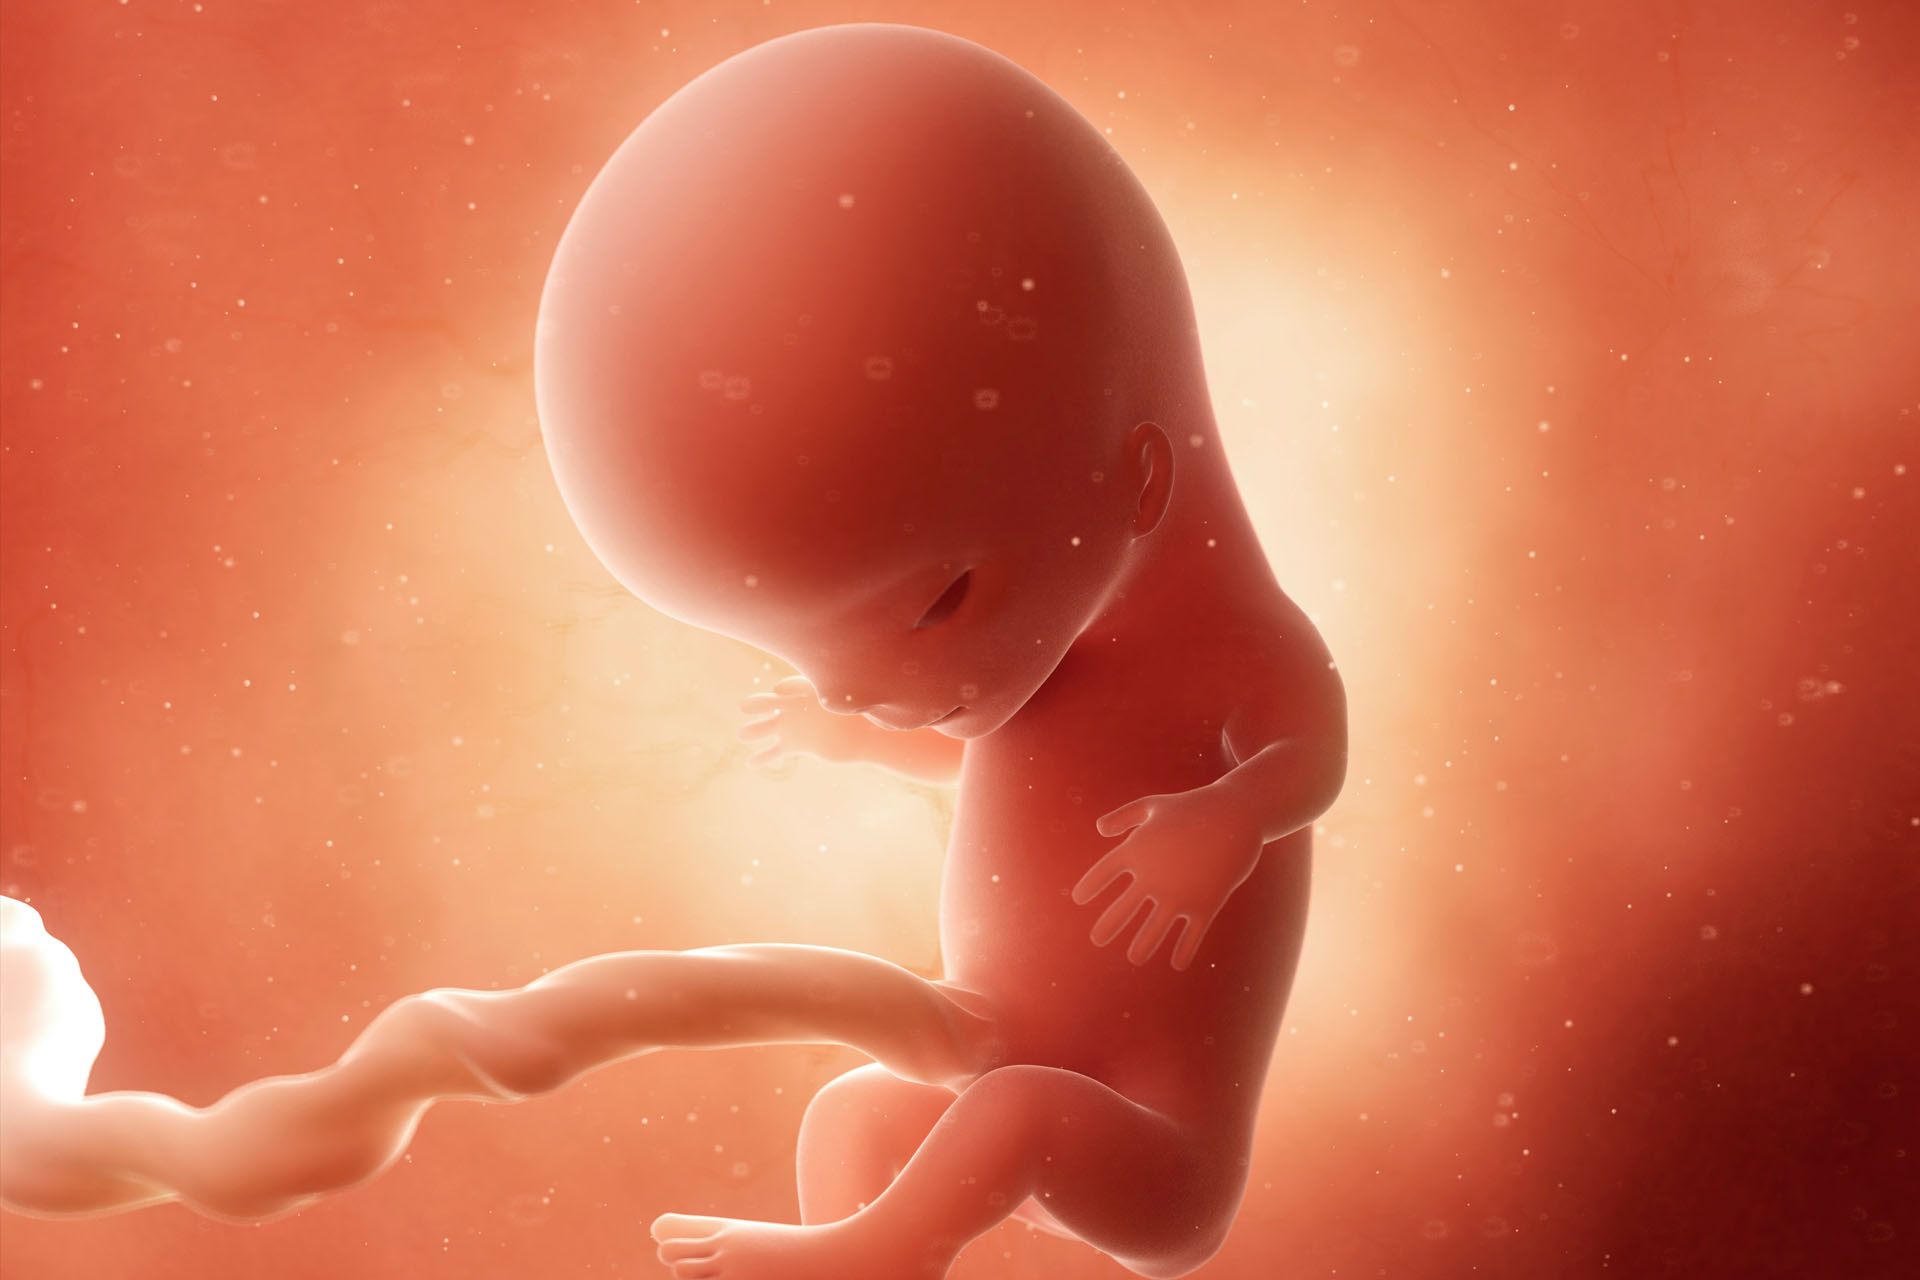 Малыш на 11 неделе. Эмбрион на 11 неделе беременности. Ребёнок 11 недель беременности эмбрион. Ребёнок в утробе 11 недель беременности. Ребёнок в 11 нелел беременности.